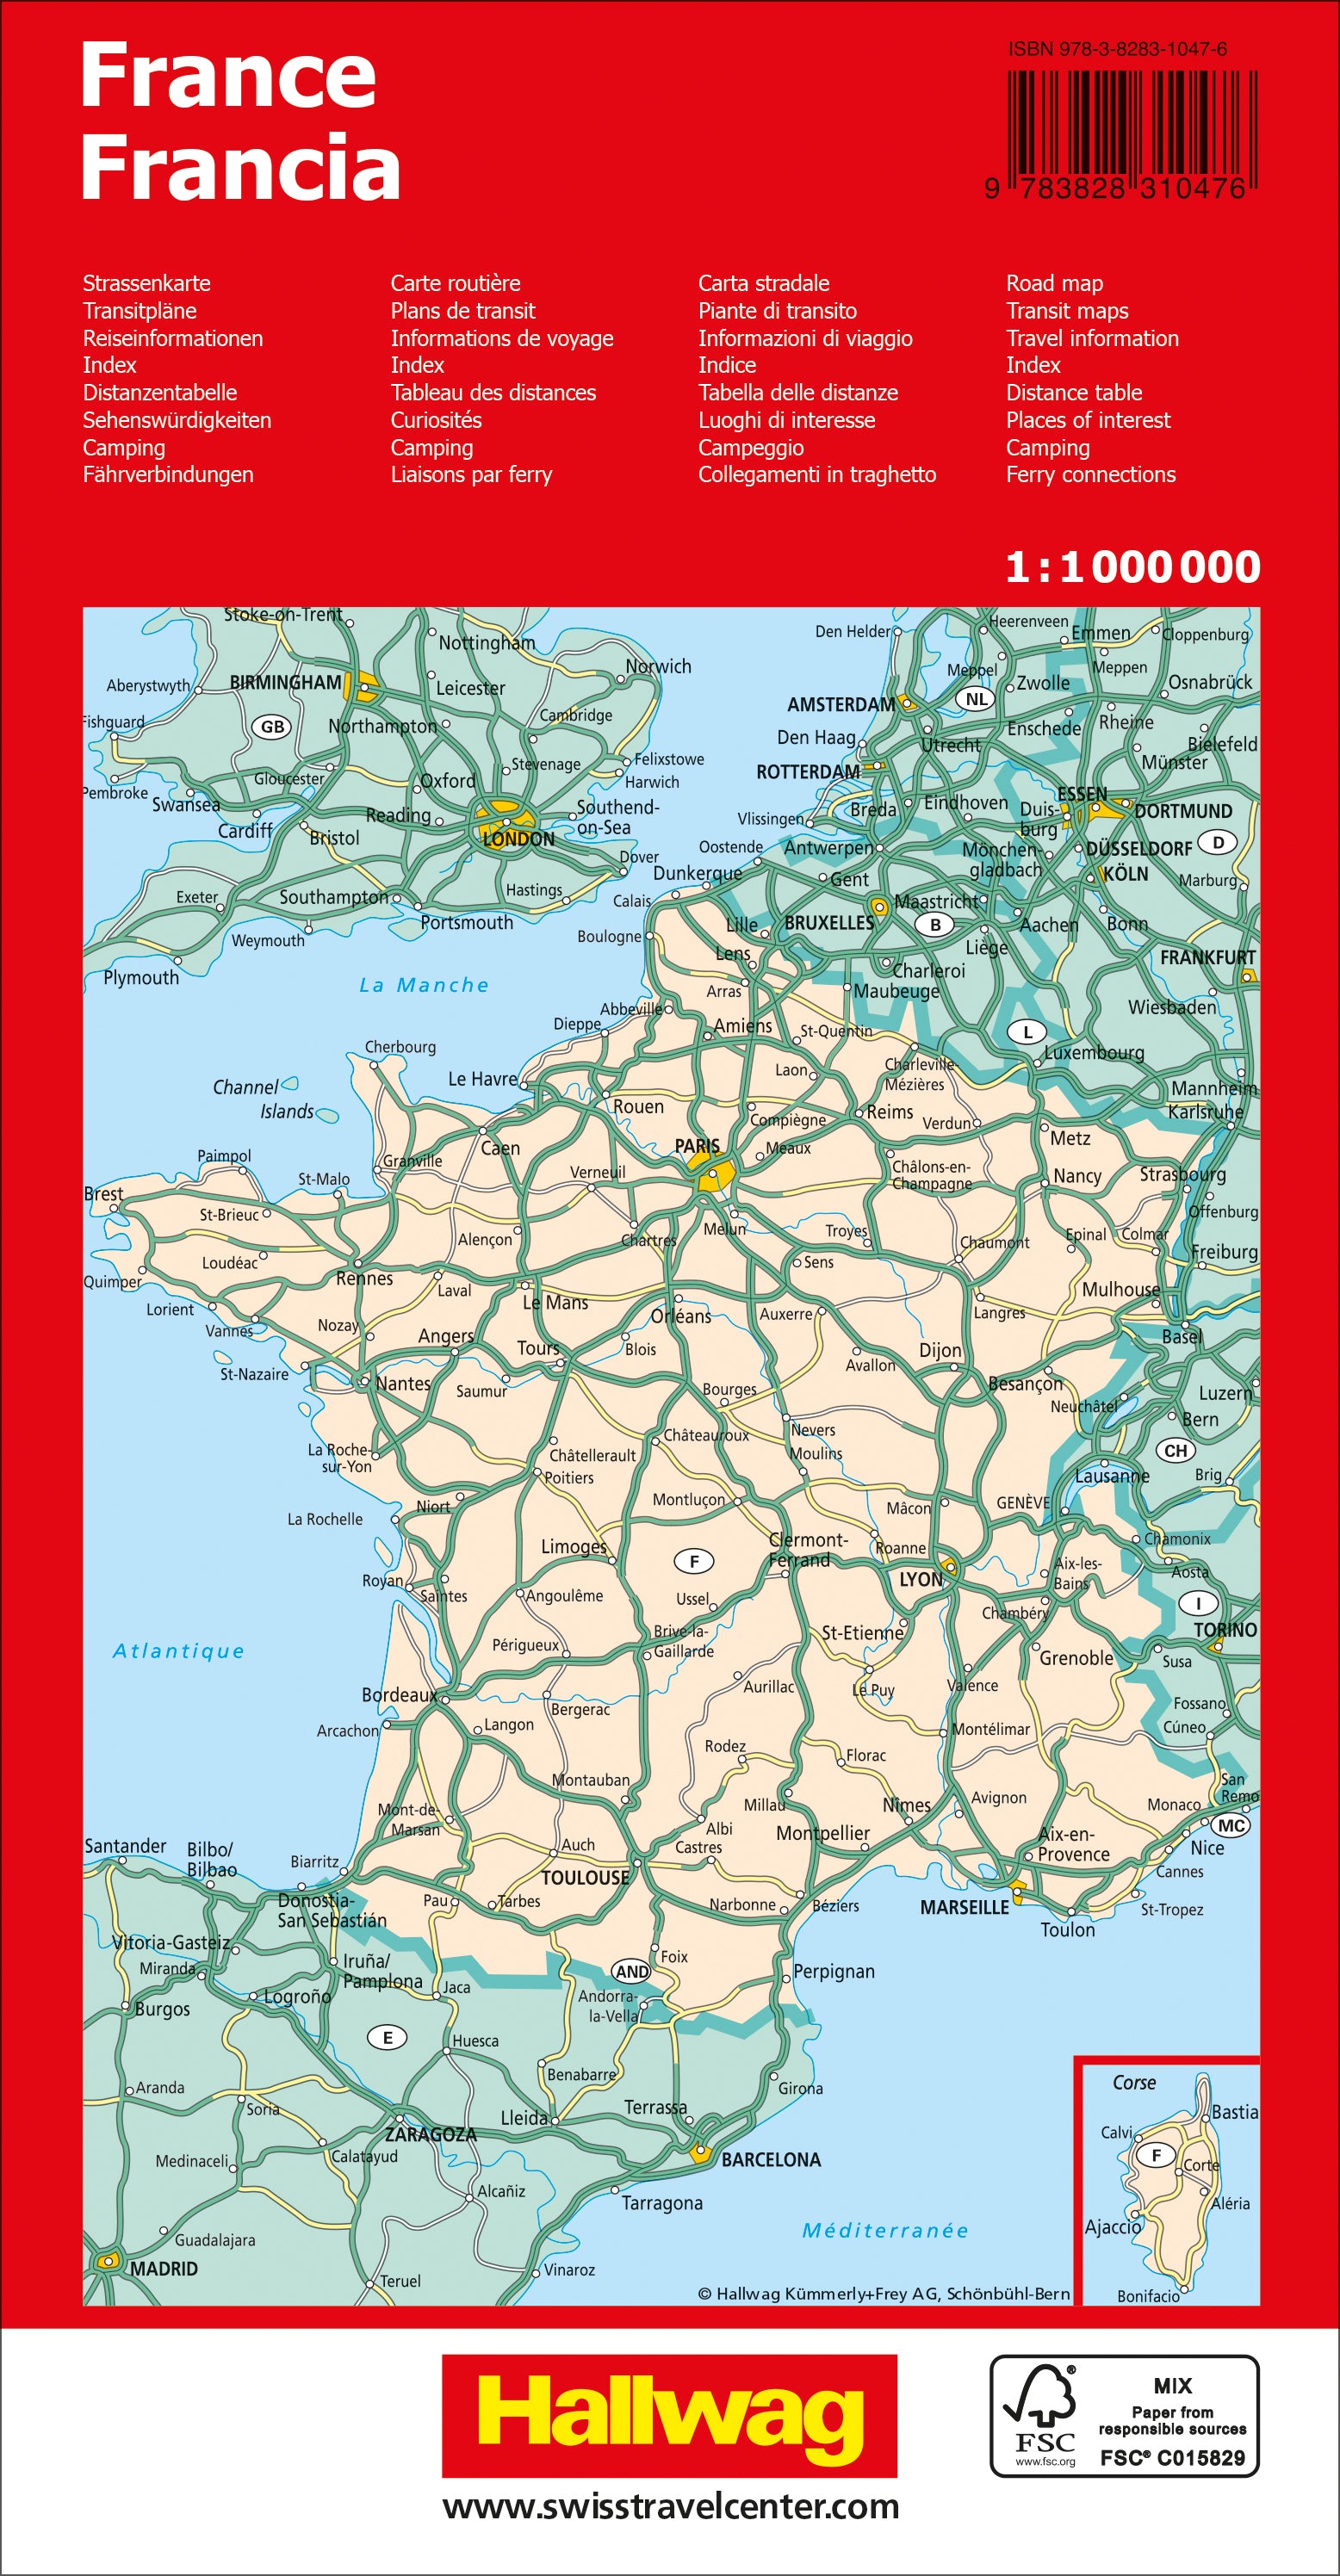 Frankreich Straßenkarte 1:1.000.000 - Hallwag